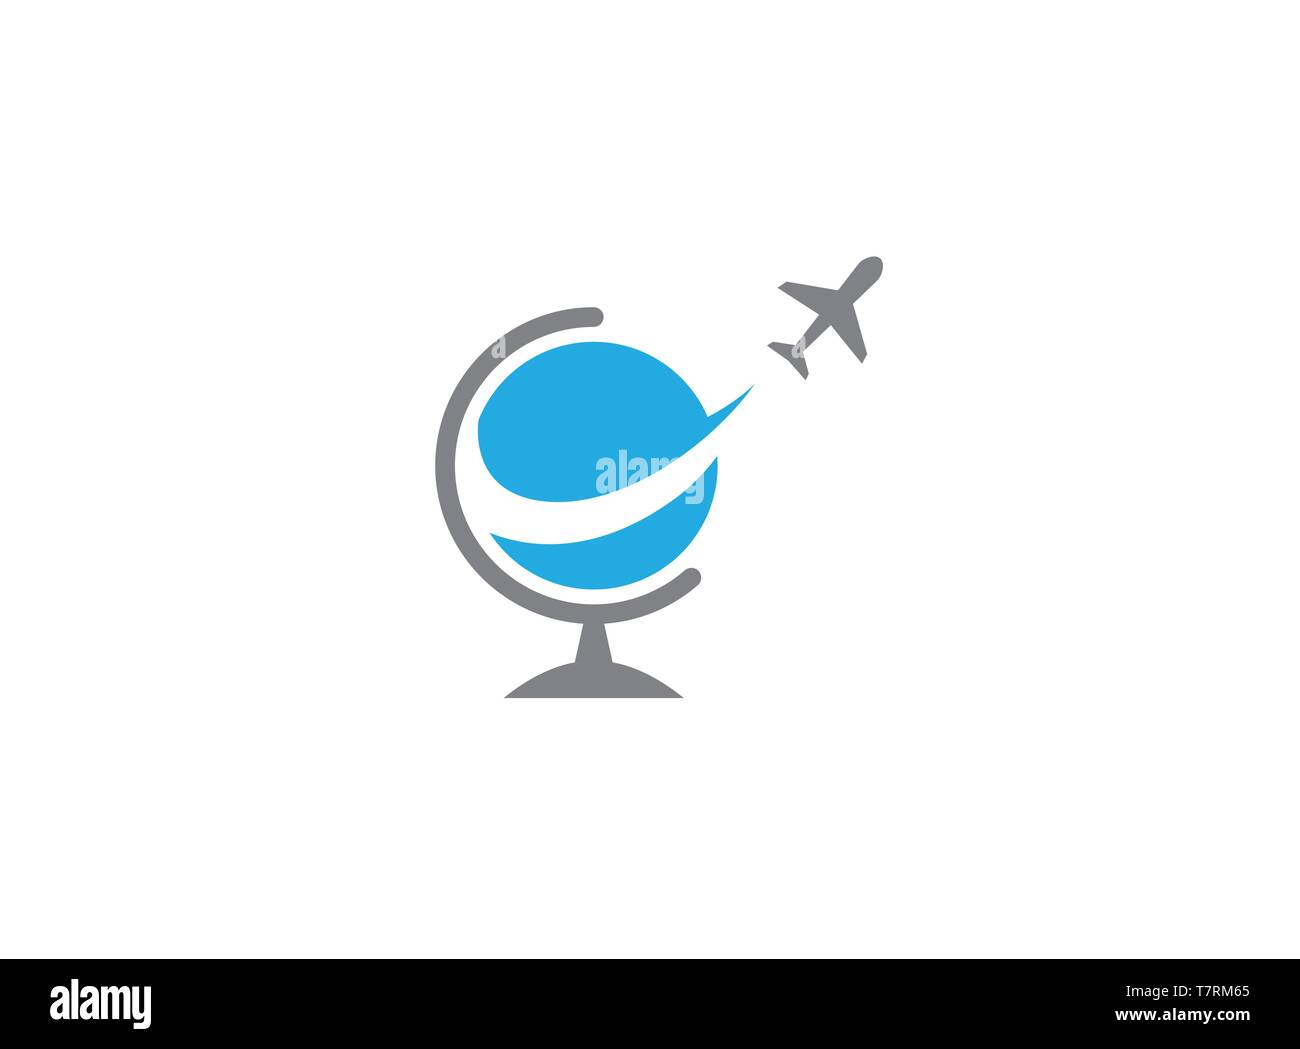 Plane flying around the globe for logo Stock Vector